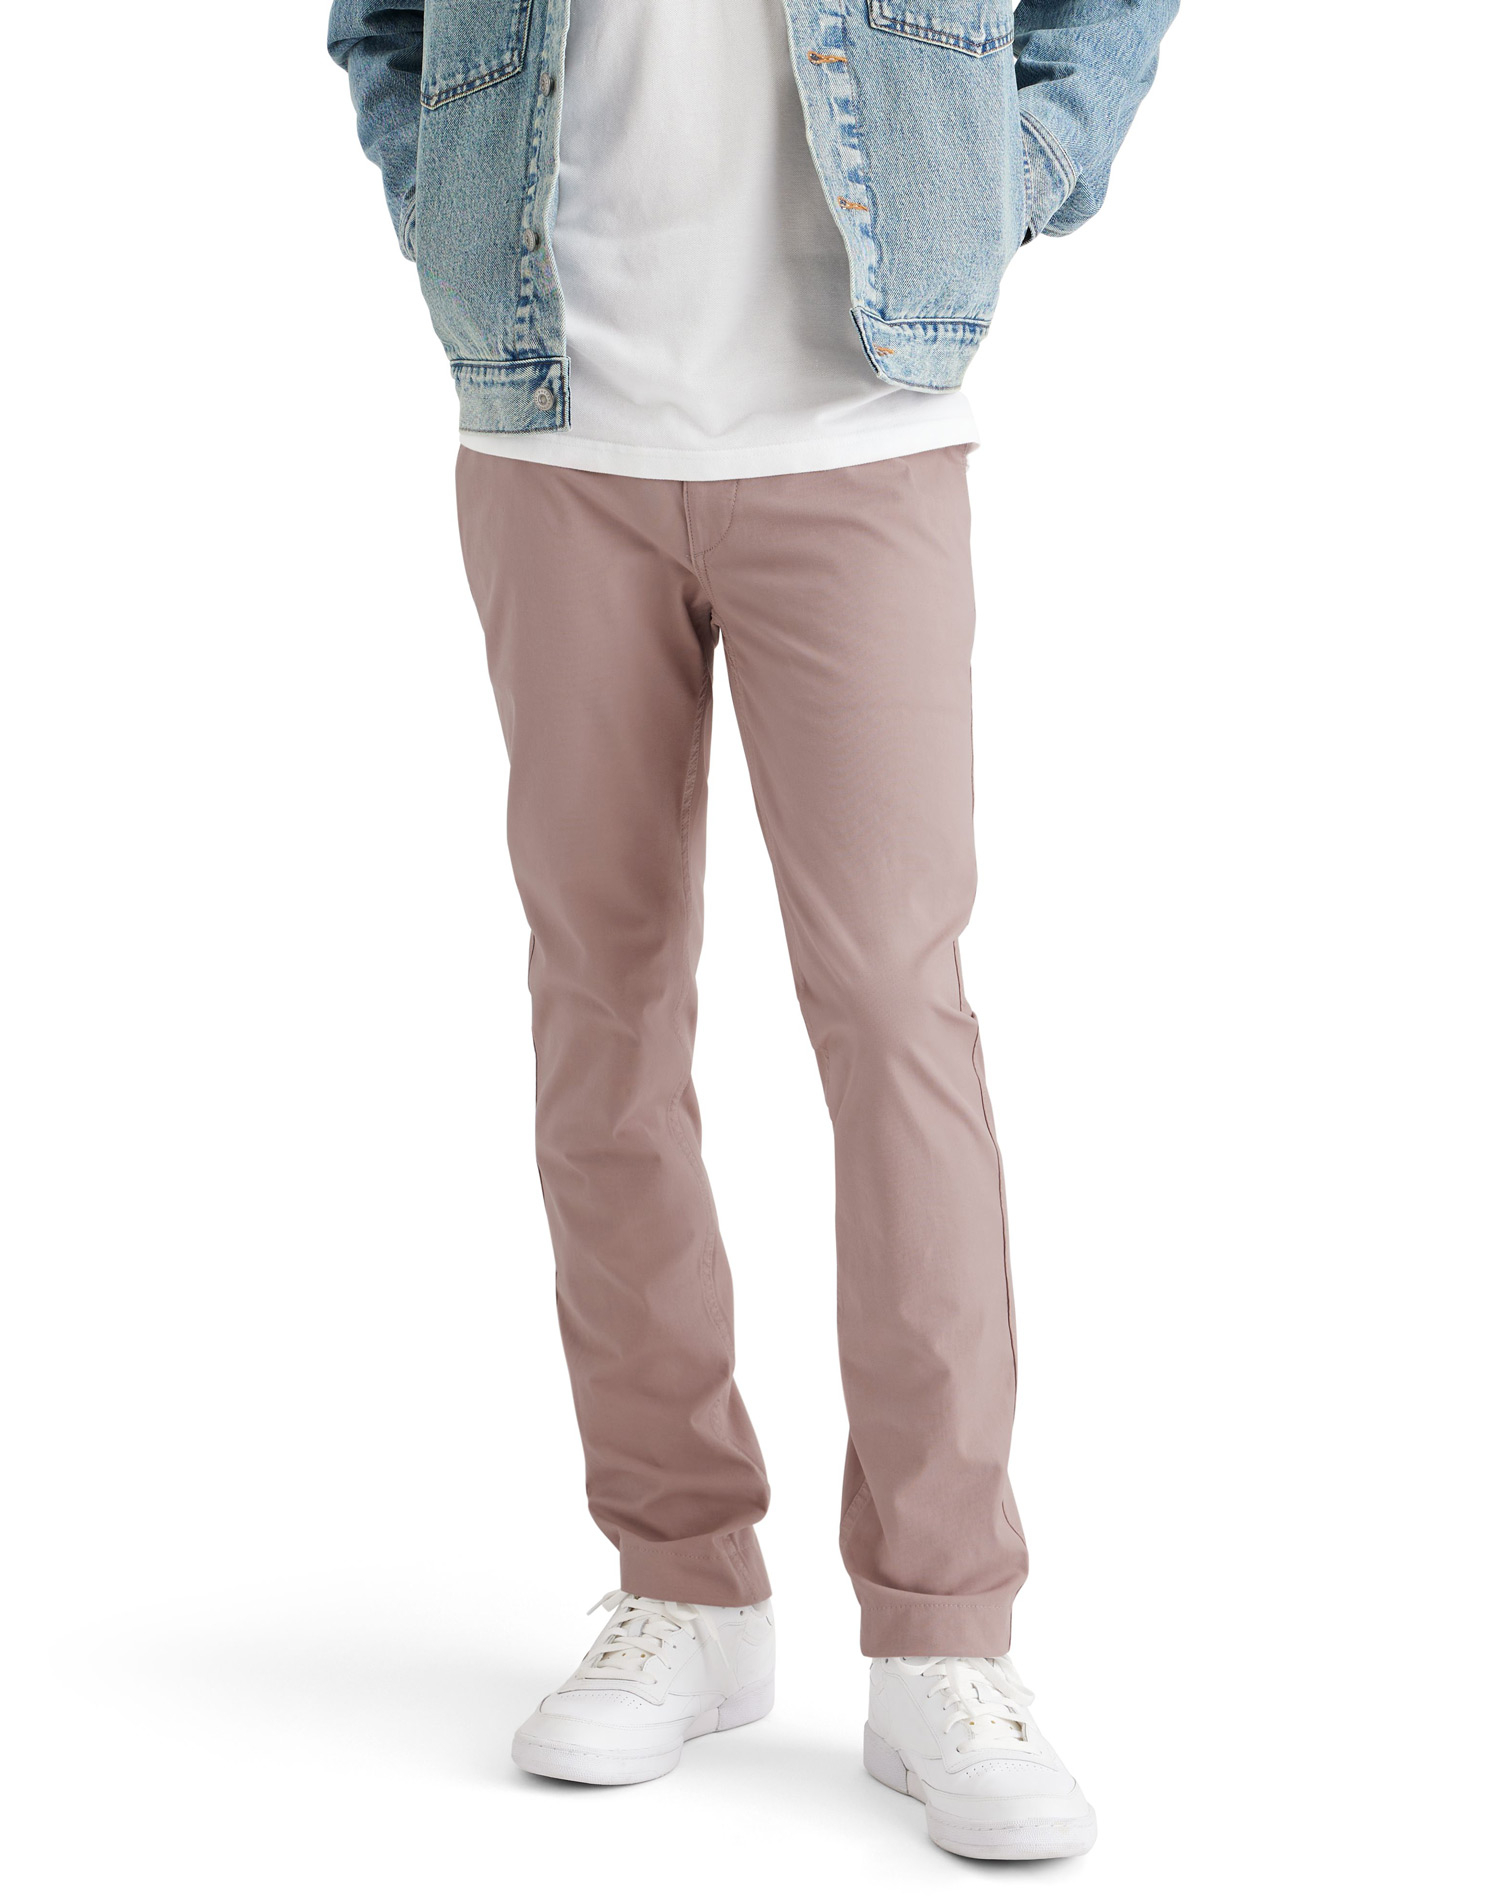 Dockers pantalons d'home Smart 360 flex California Khaki Skinny lightweight A3130-0018 bordeus clar